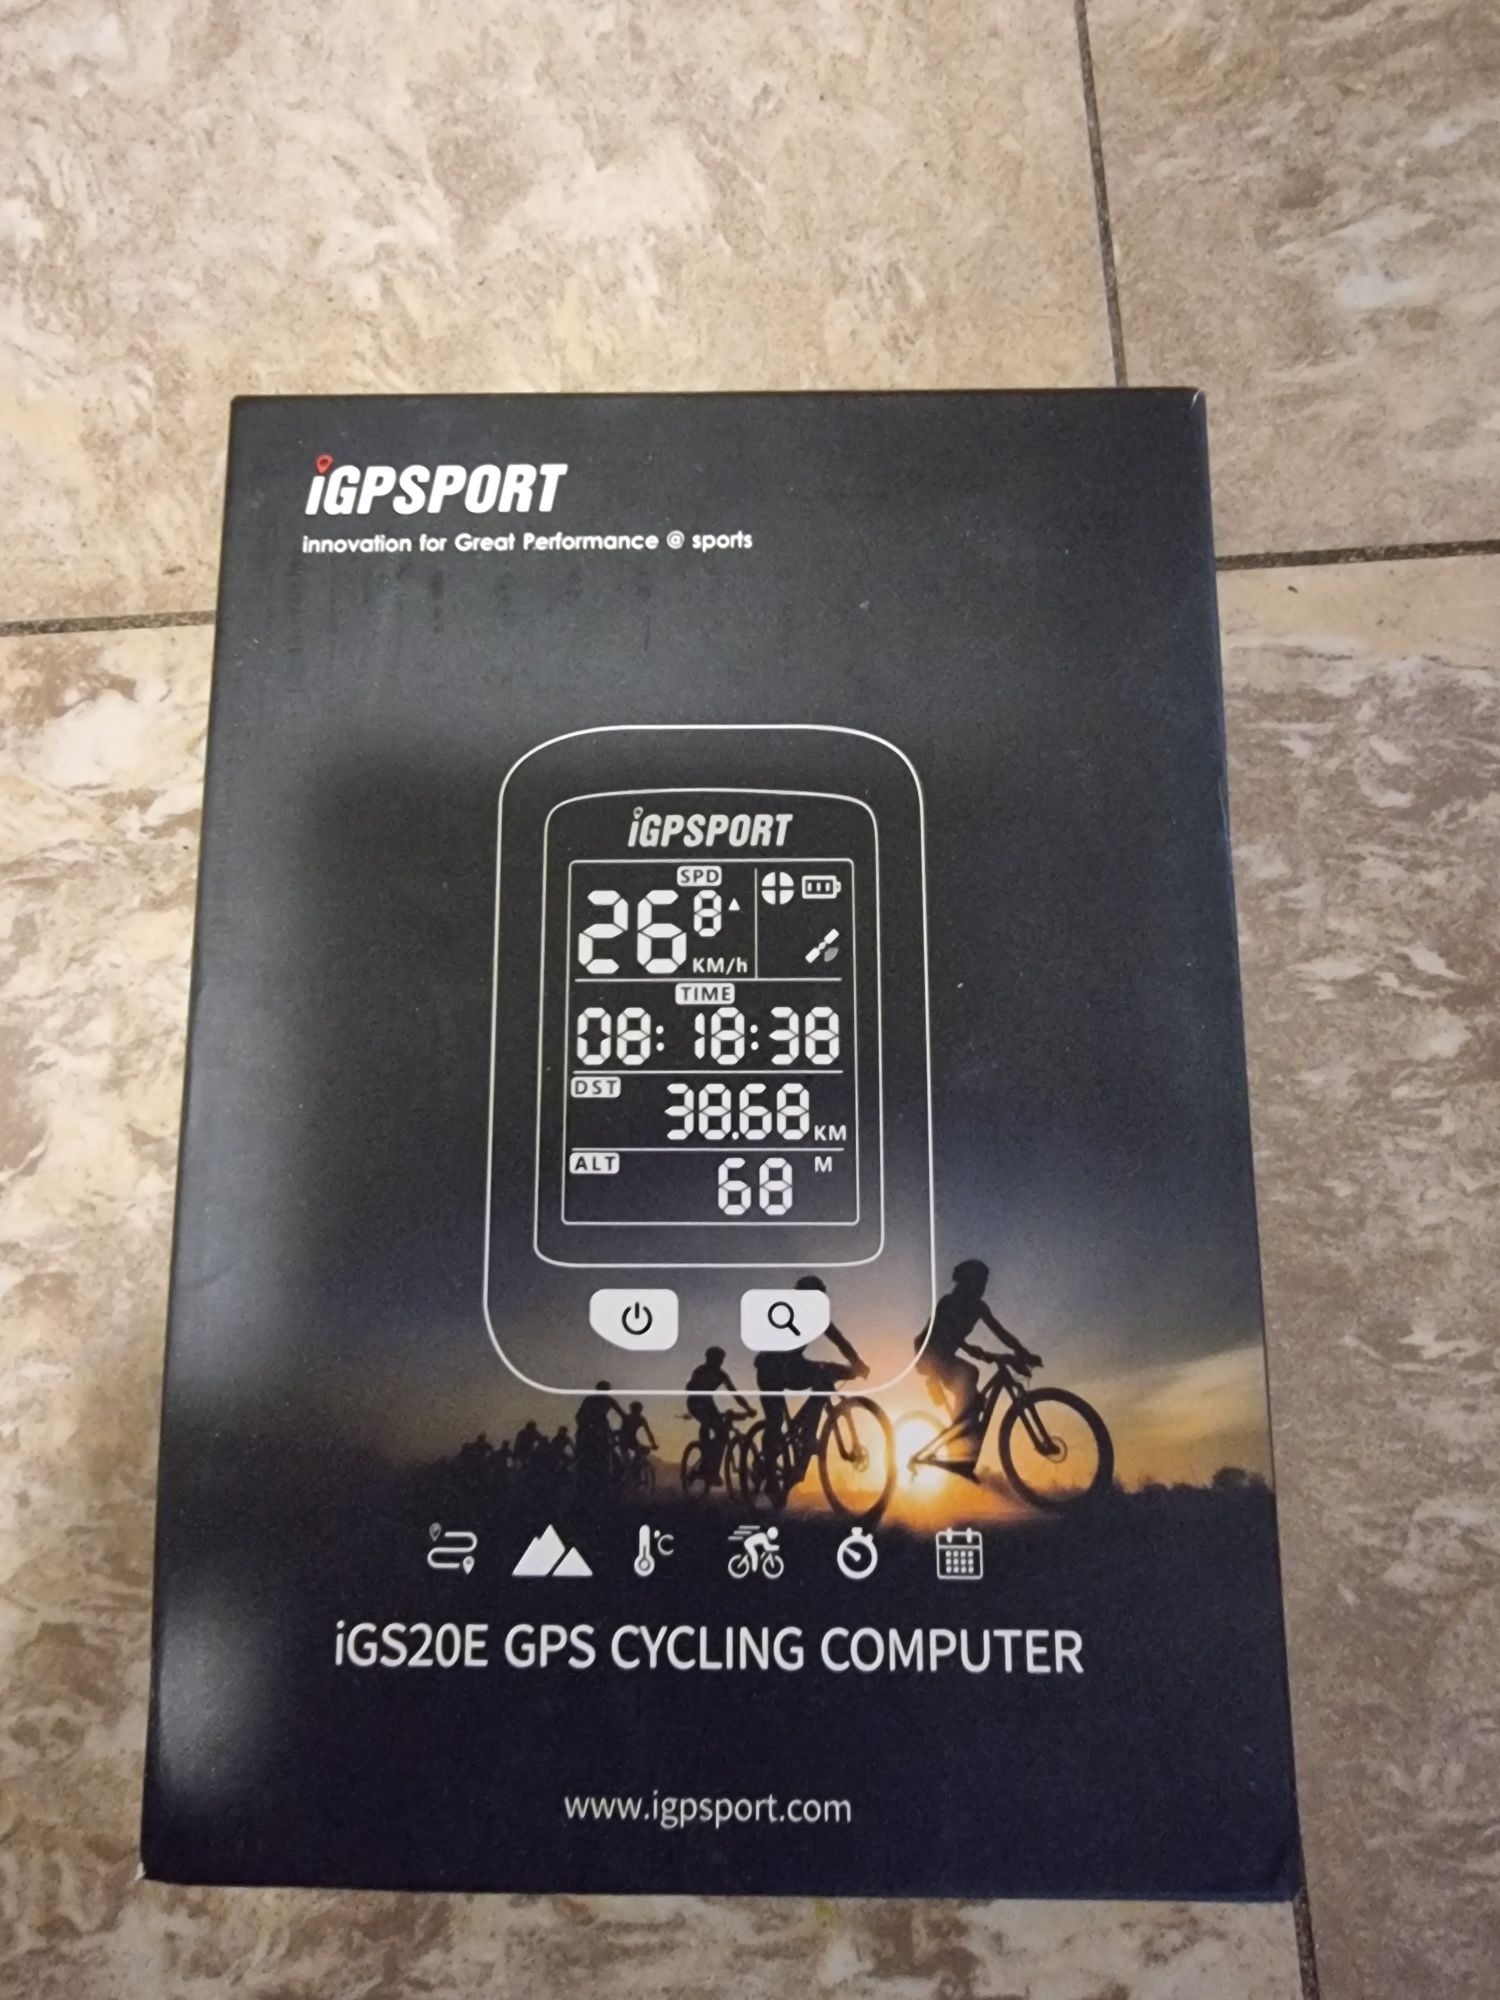 Ciclocomputer GPS iGPSPORT iGS 20E